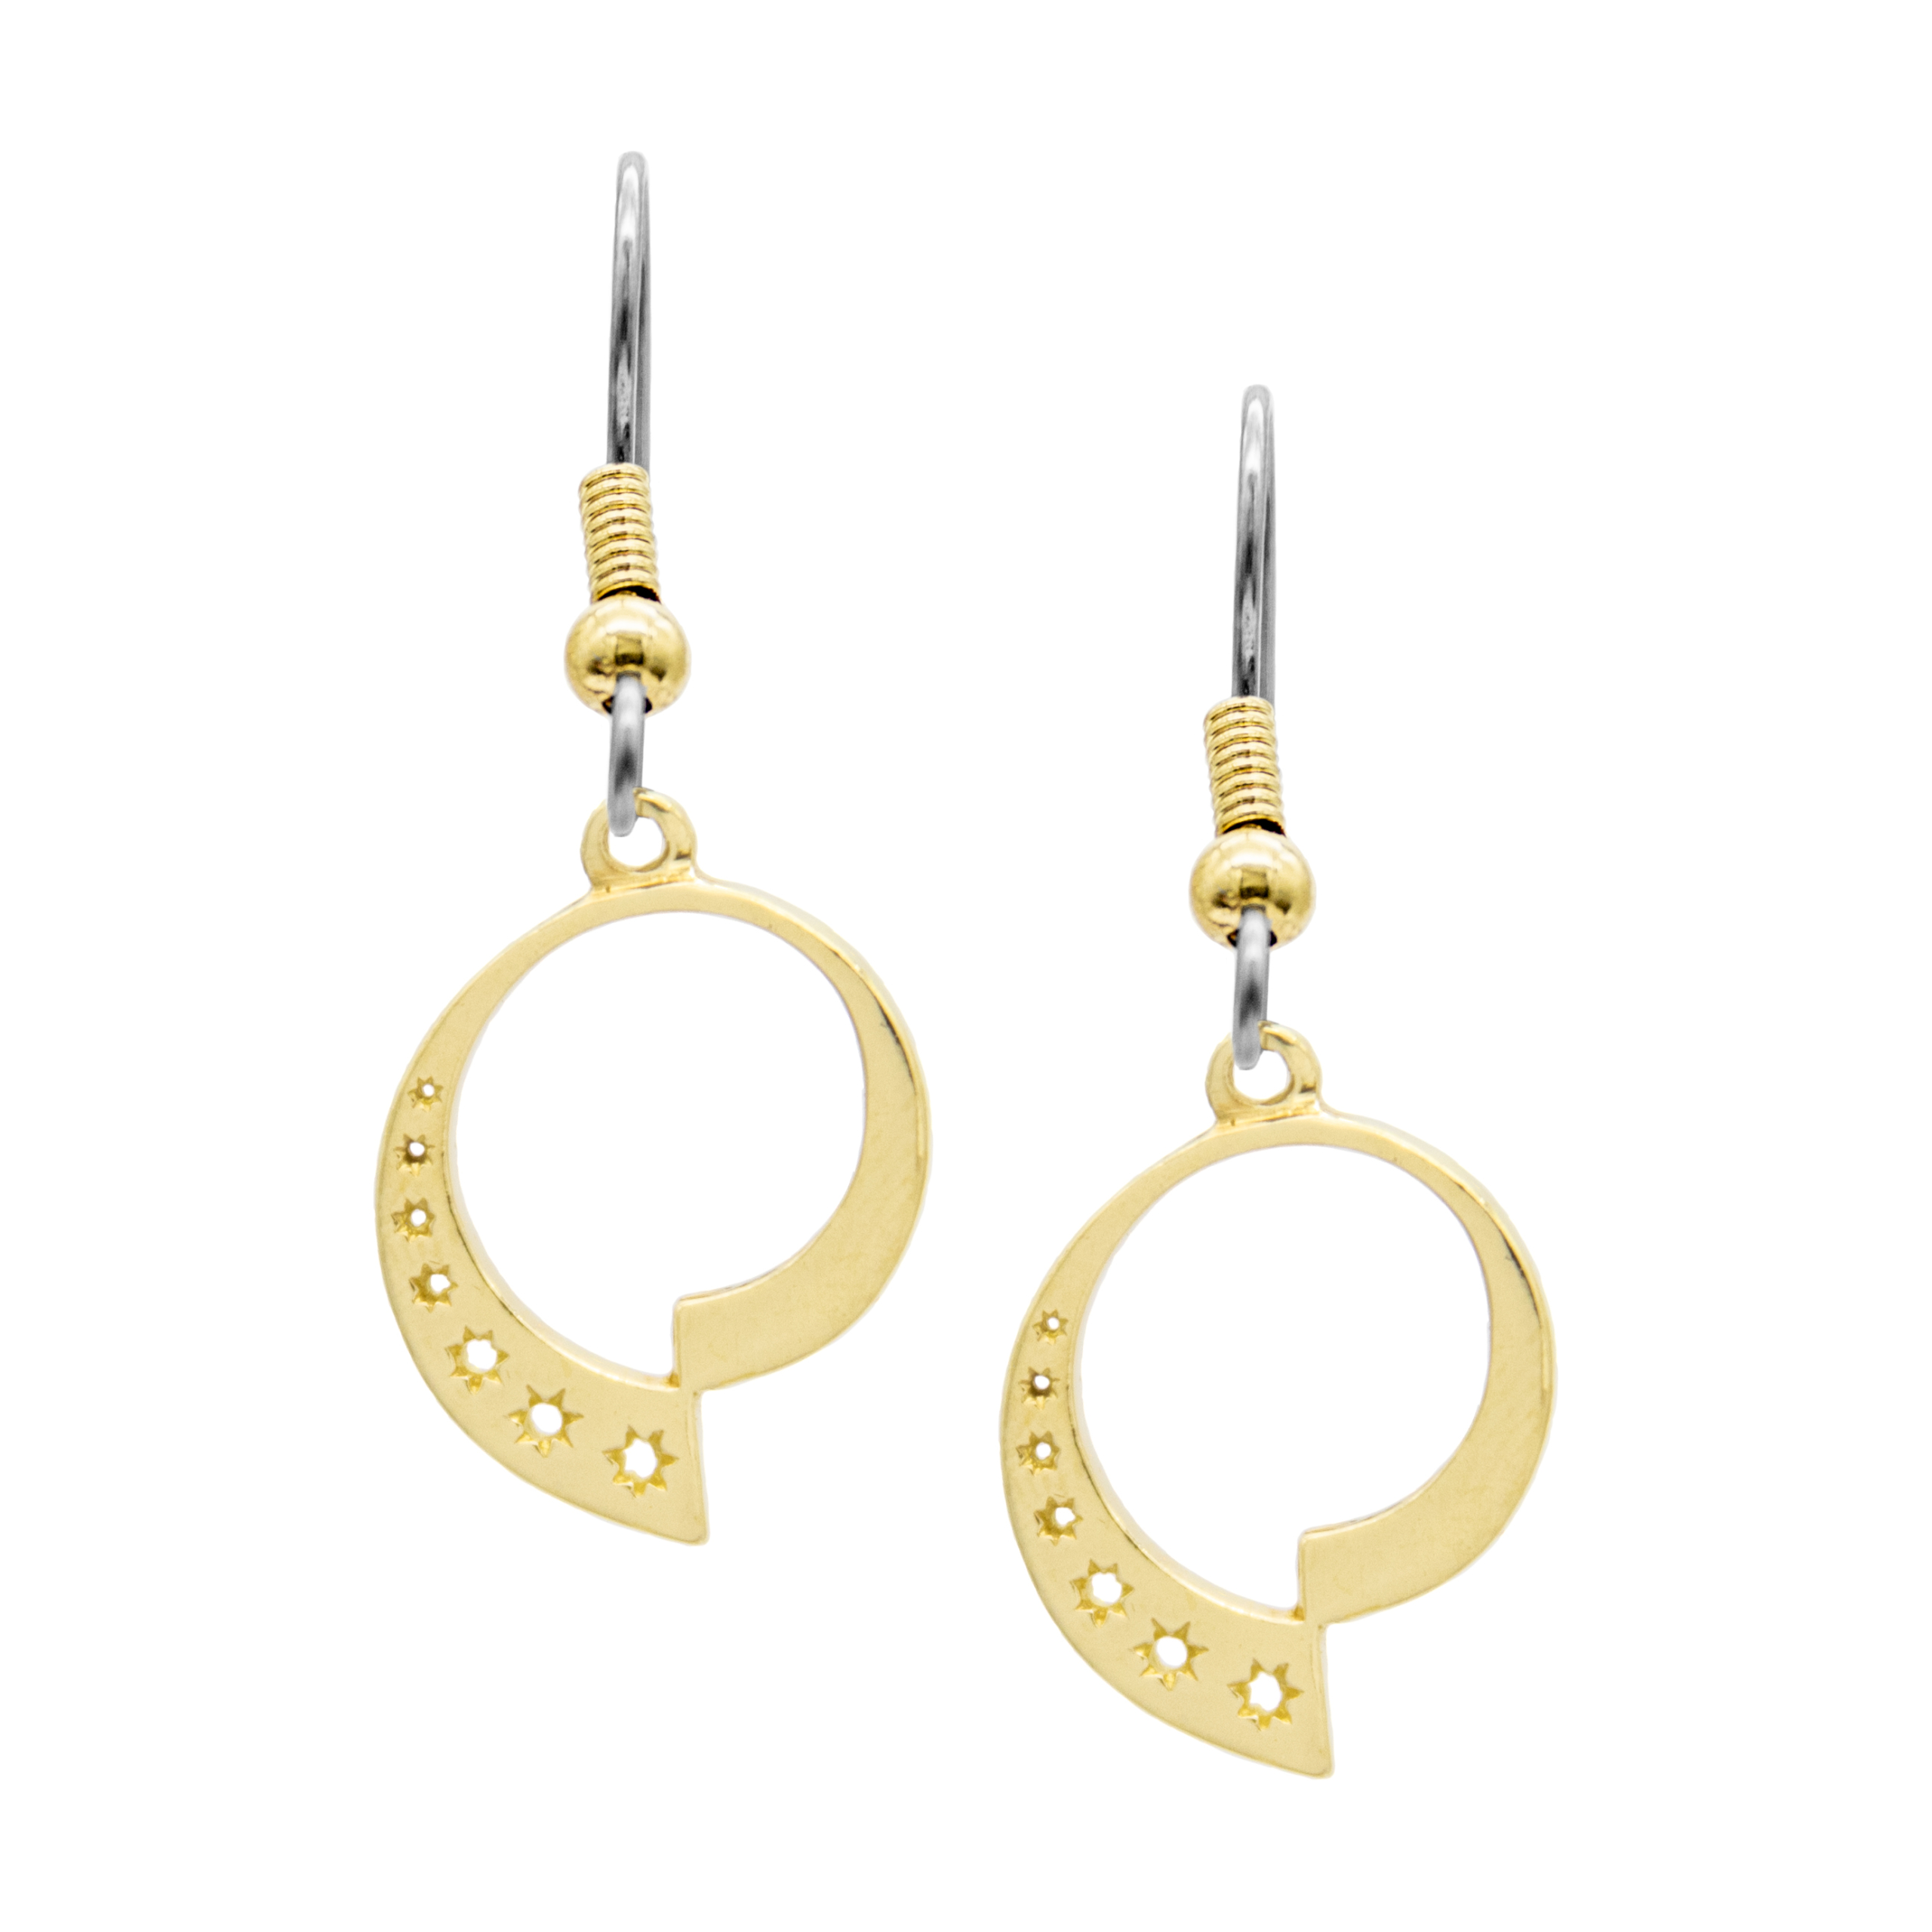 Fractalverse earrings